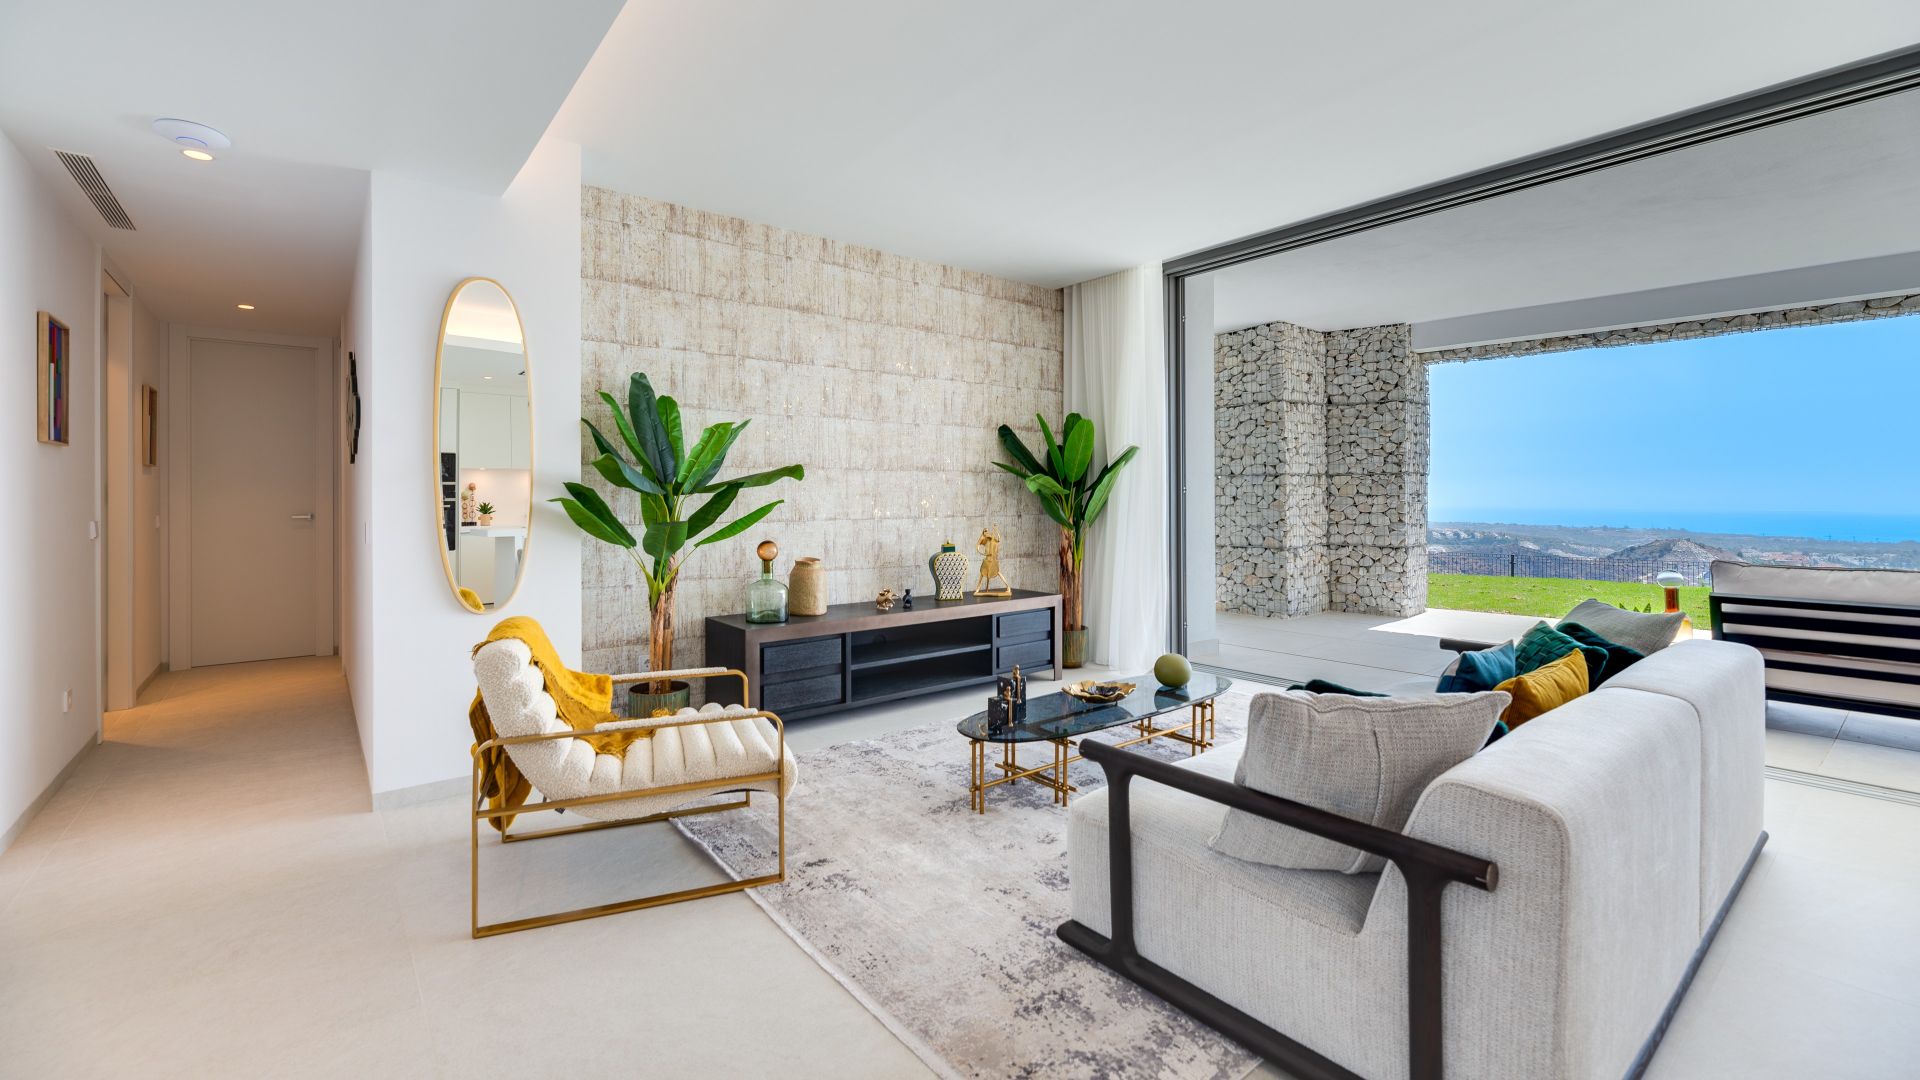 Spacious splendor apartment with breathtaking views | Engel & Völkers Marbella